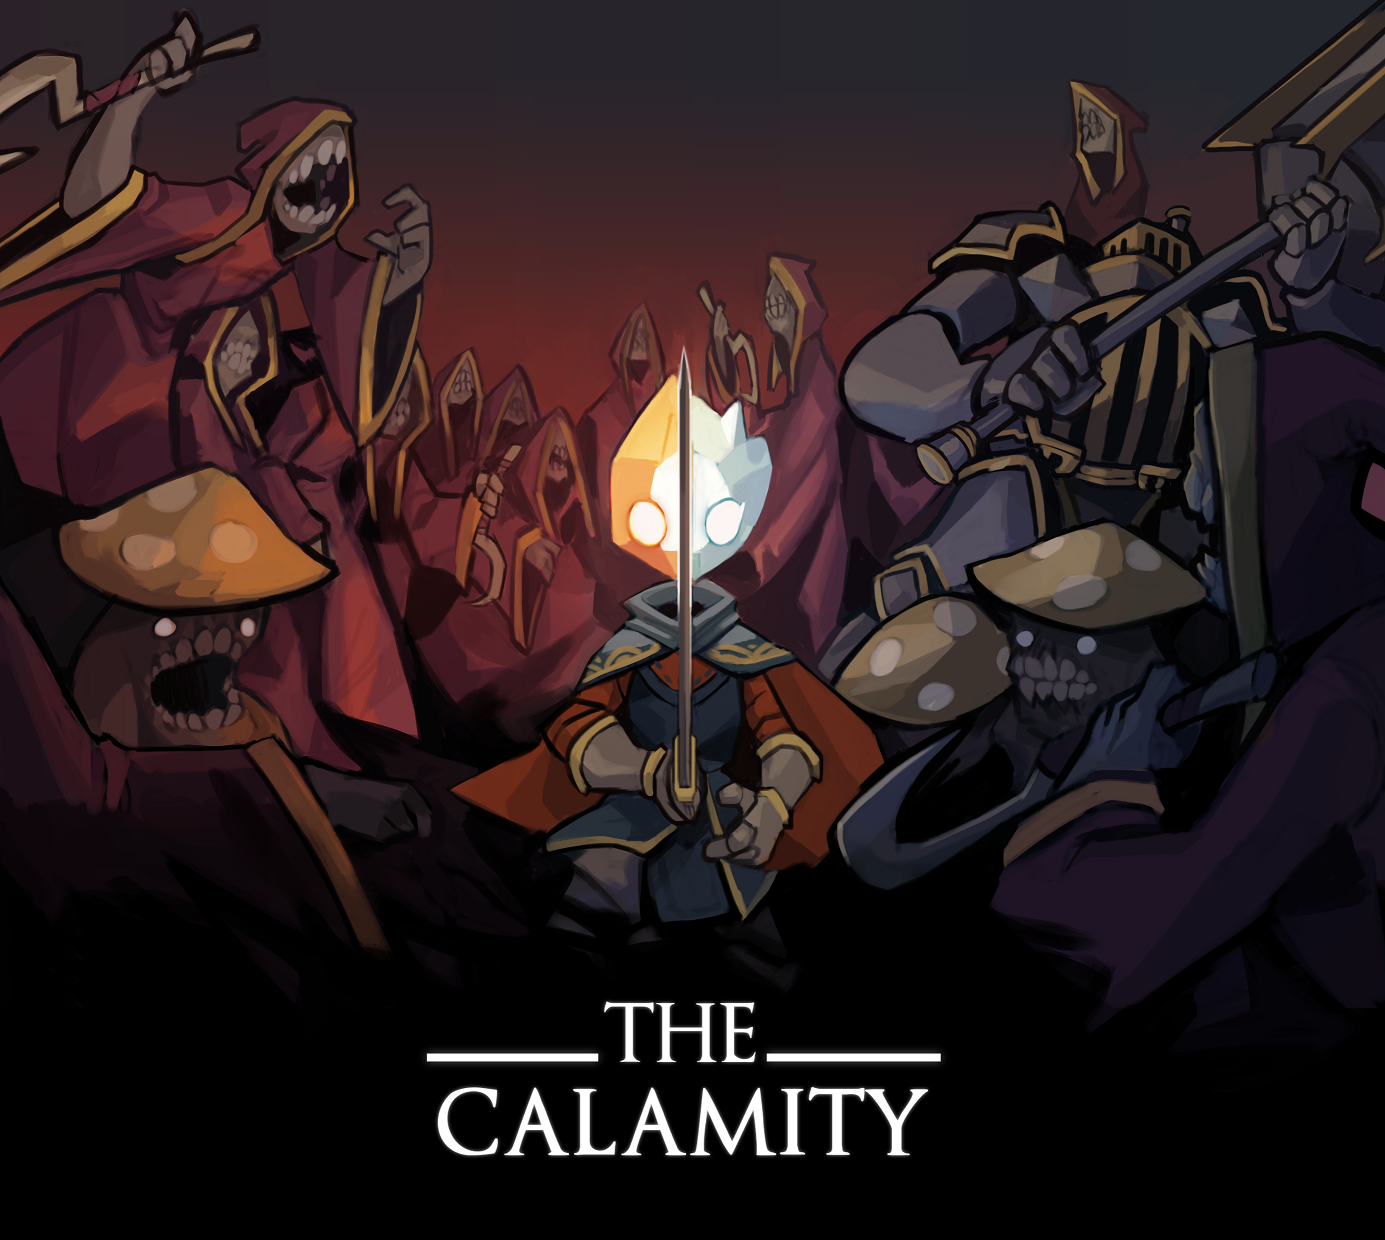 The Calamity